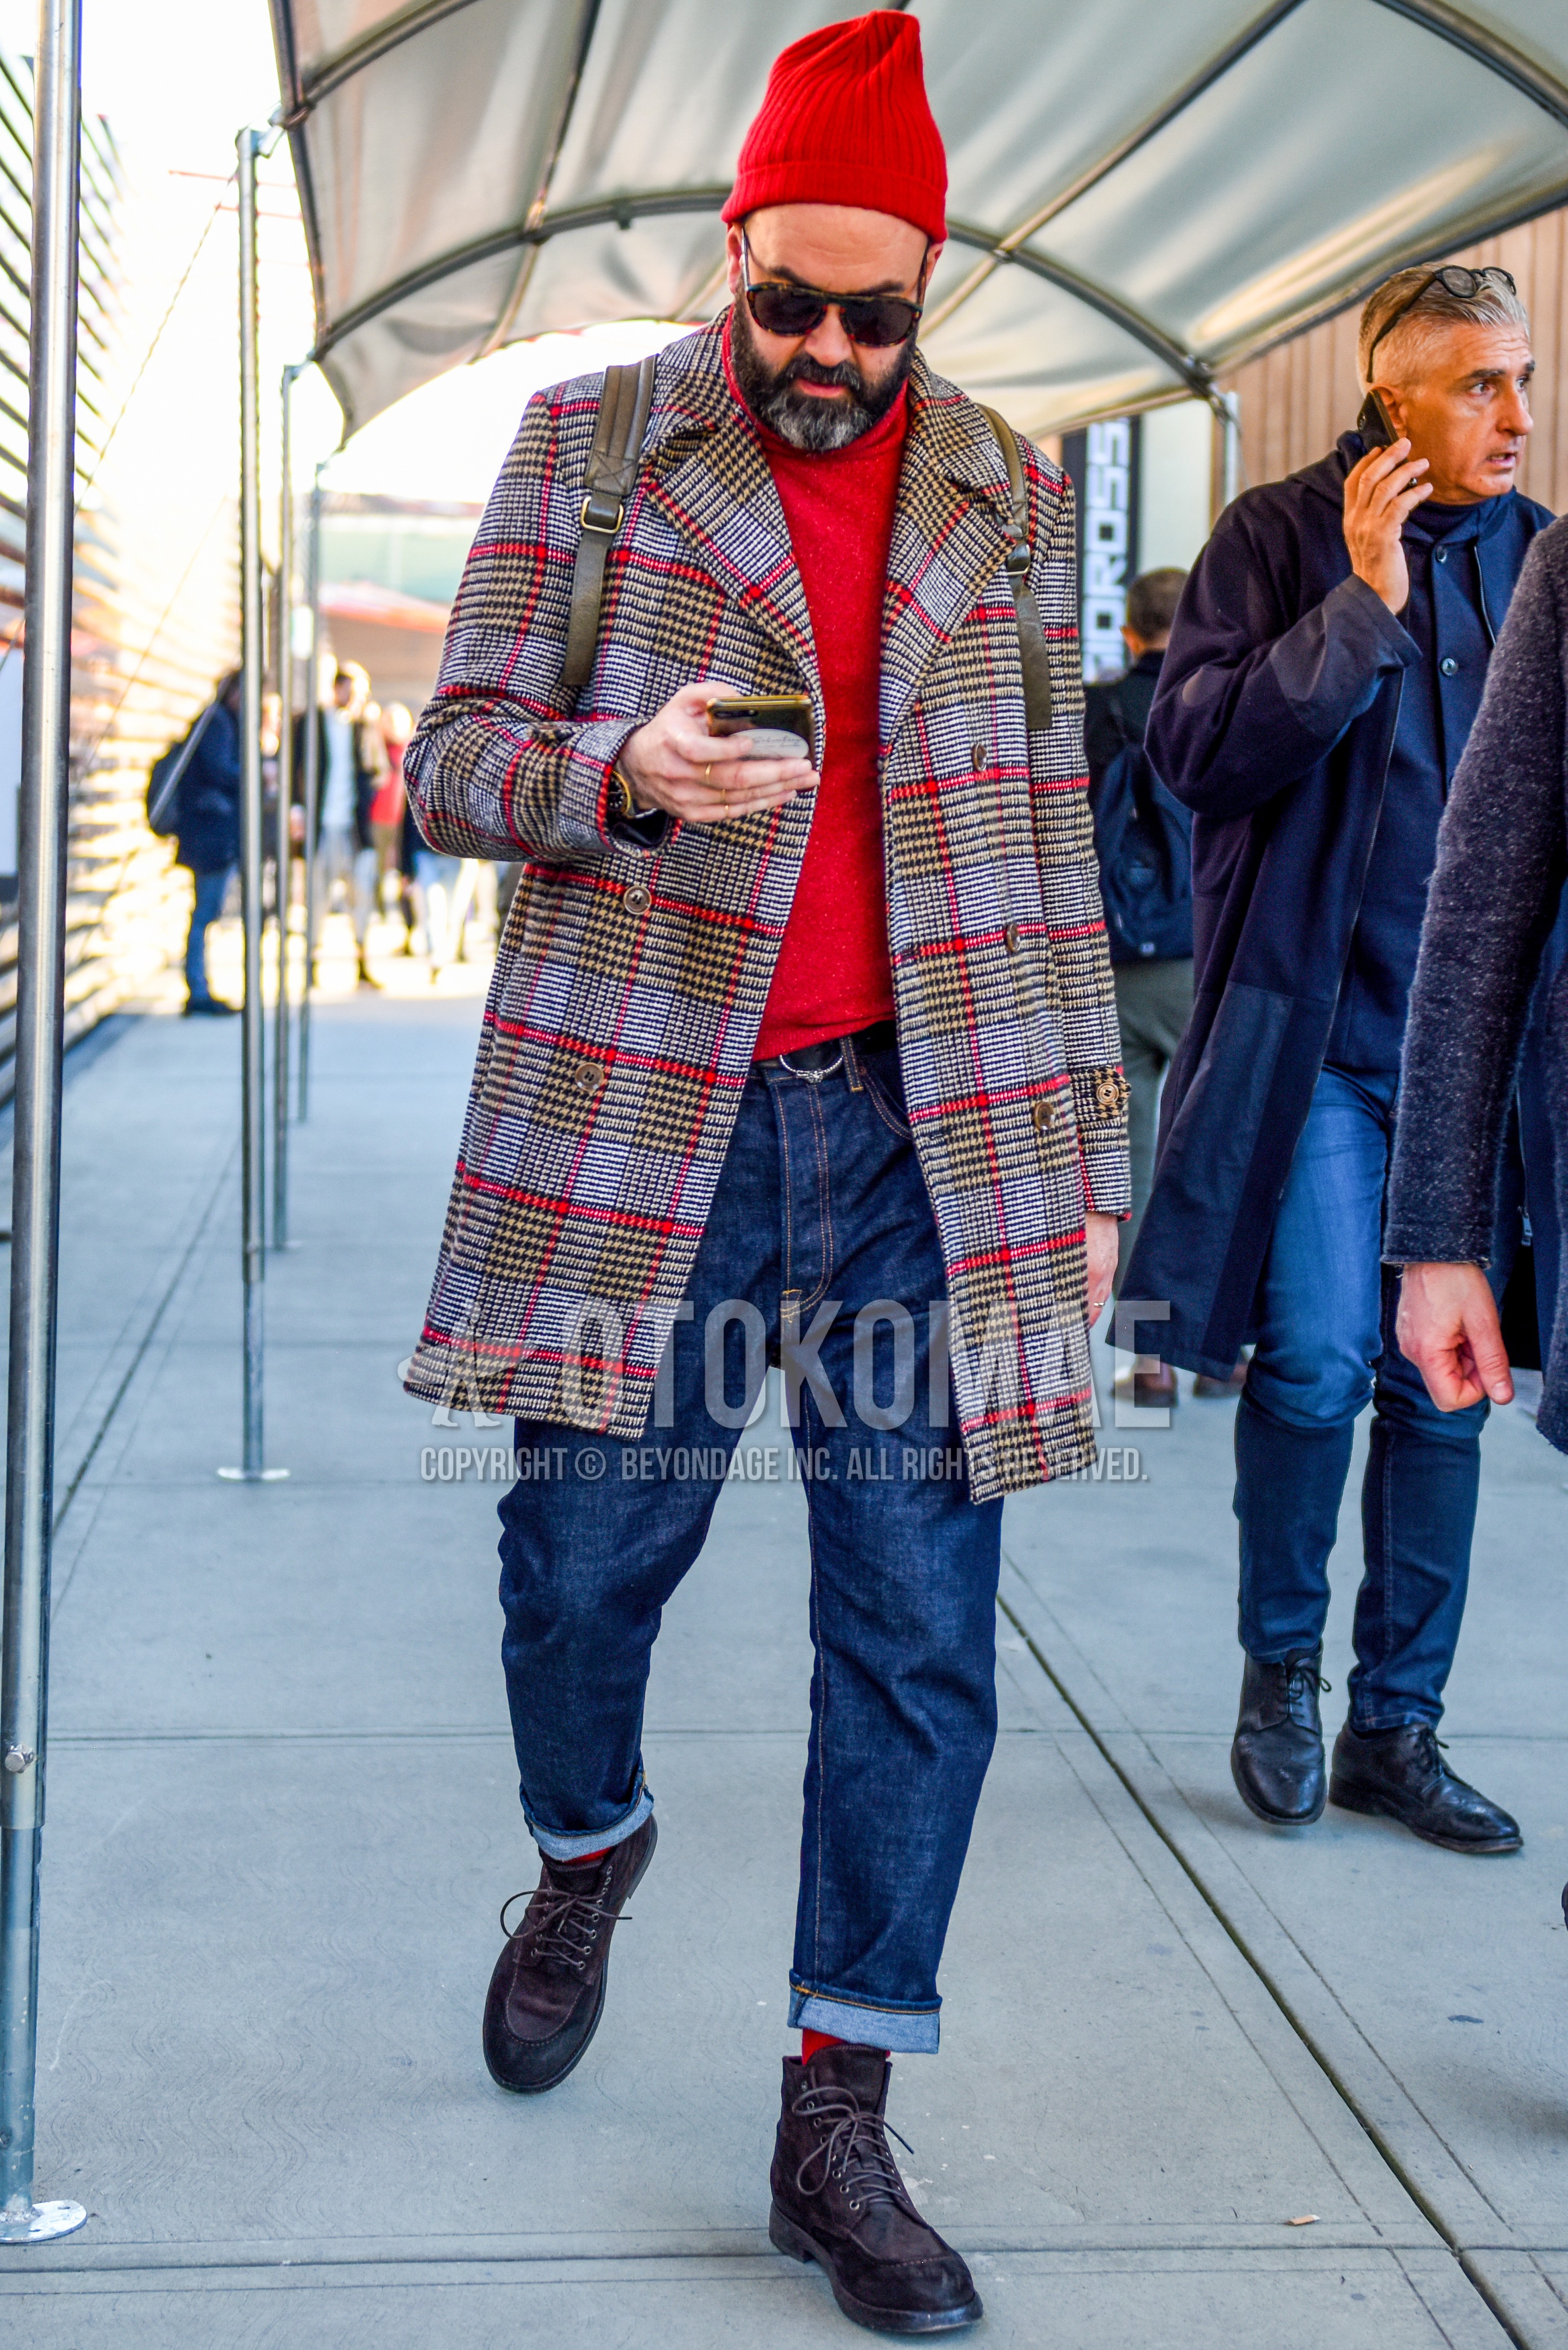 Men's autumn winter outfit with red plain knit cap, brown tortoiseshell sunglasses, gray check ulster coat, red plain turtleneck knit, black plain leather belt, blue plain denim/jeans, red plain socks, brown  boots.